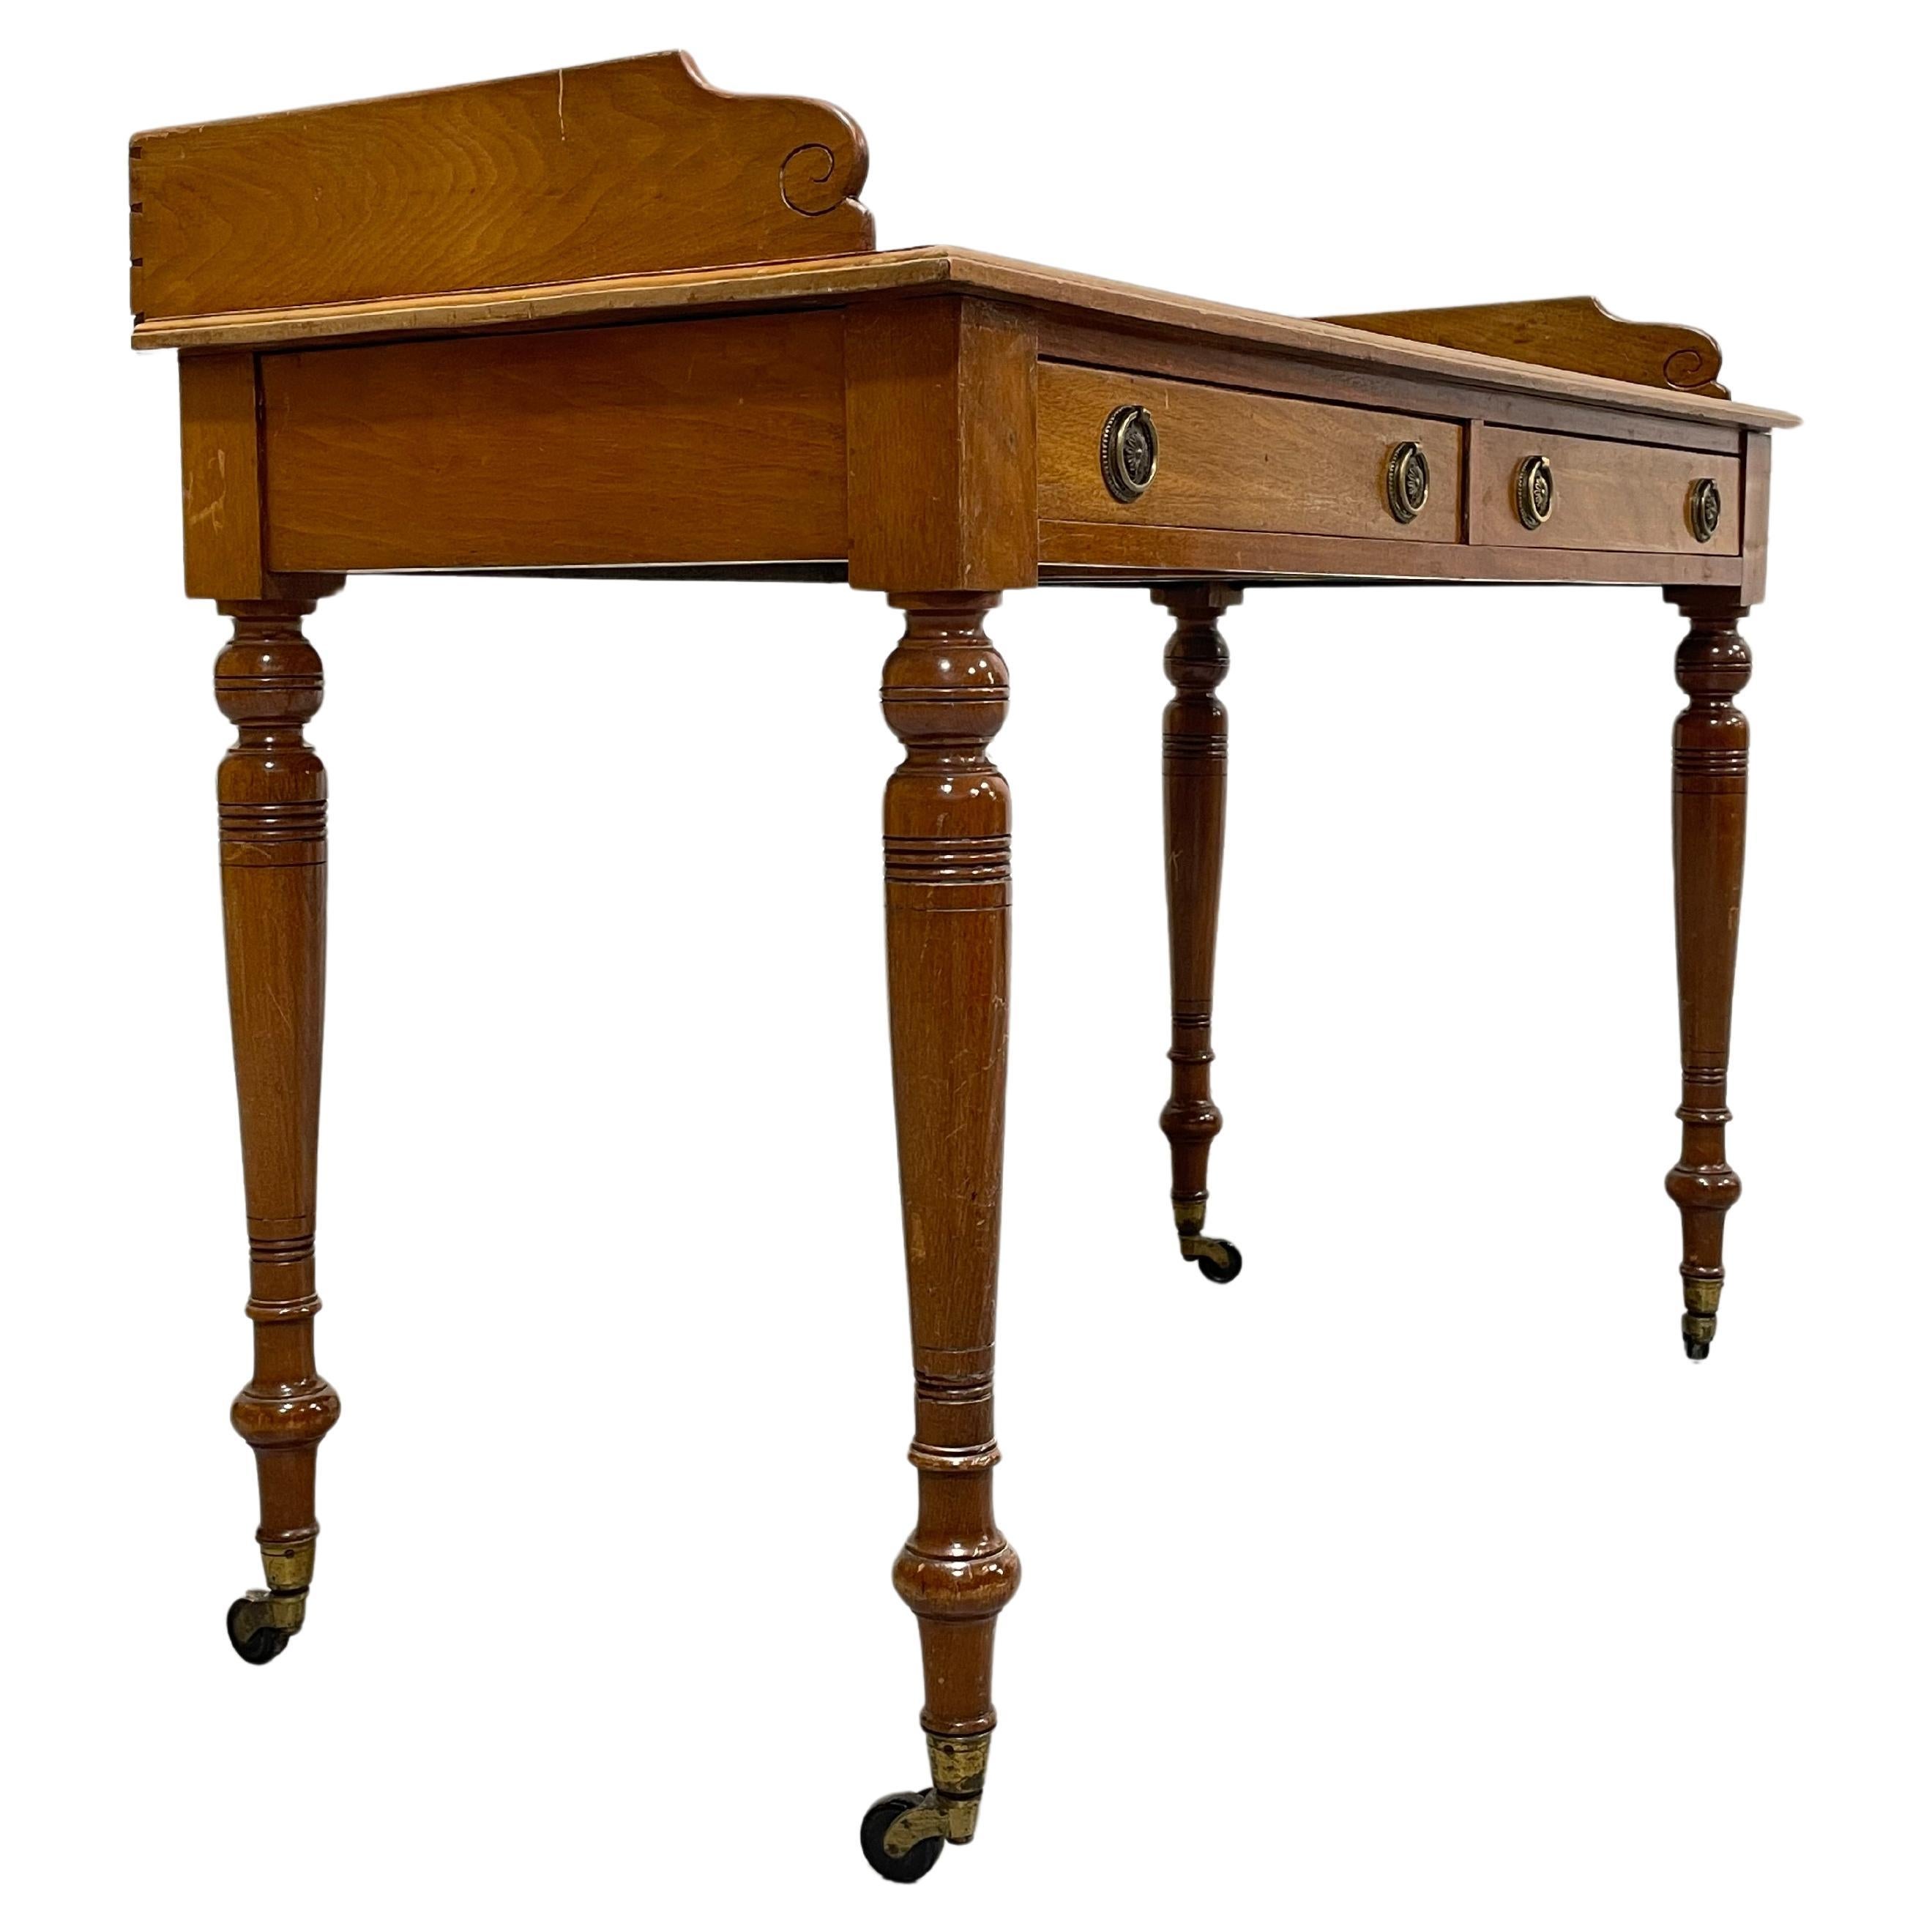 Antique Mahogany Writing Table / Server Turned Legs Wheels, c. 1890